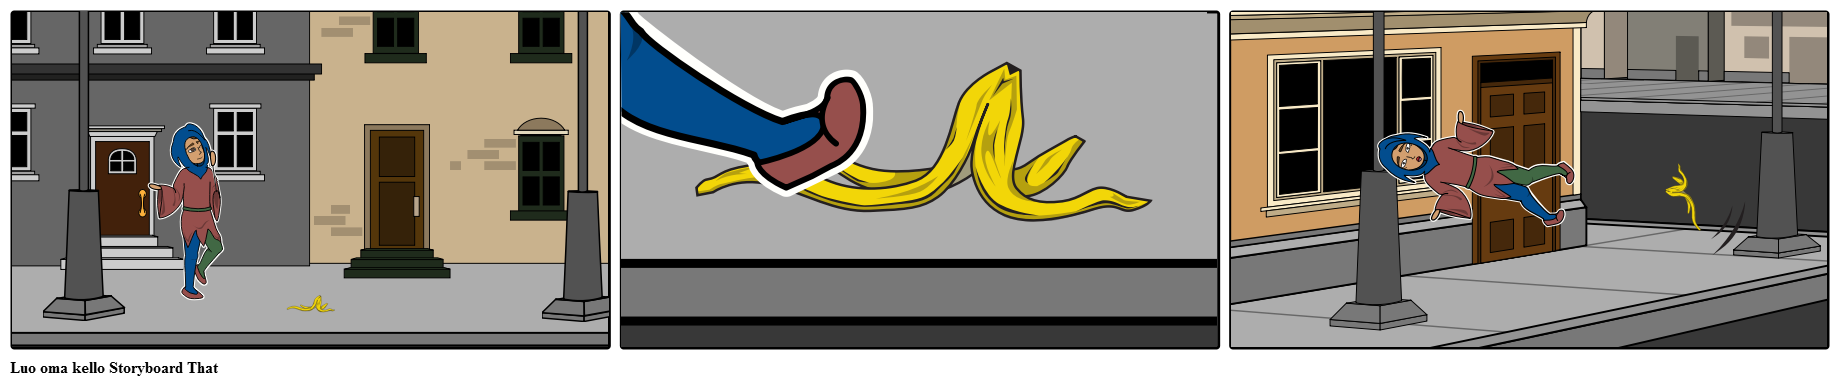 Jester liukastuu banaanin kuori